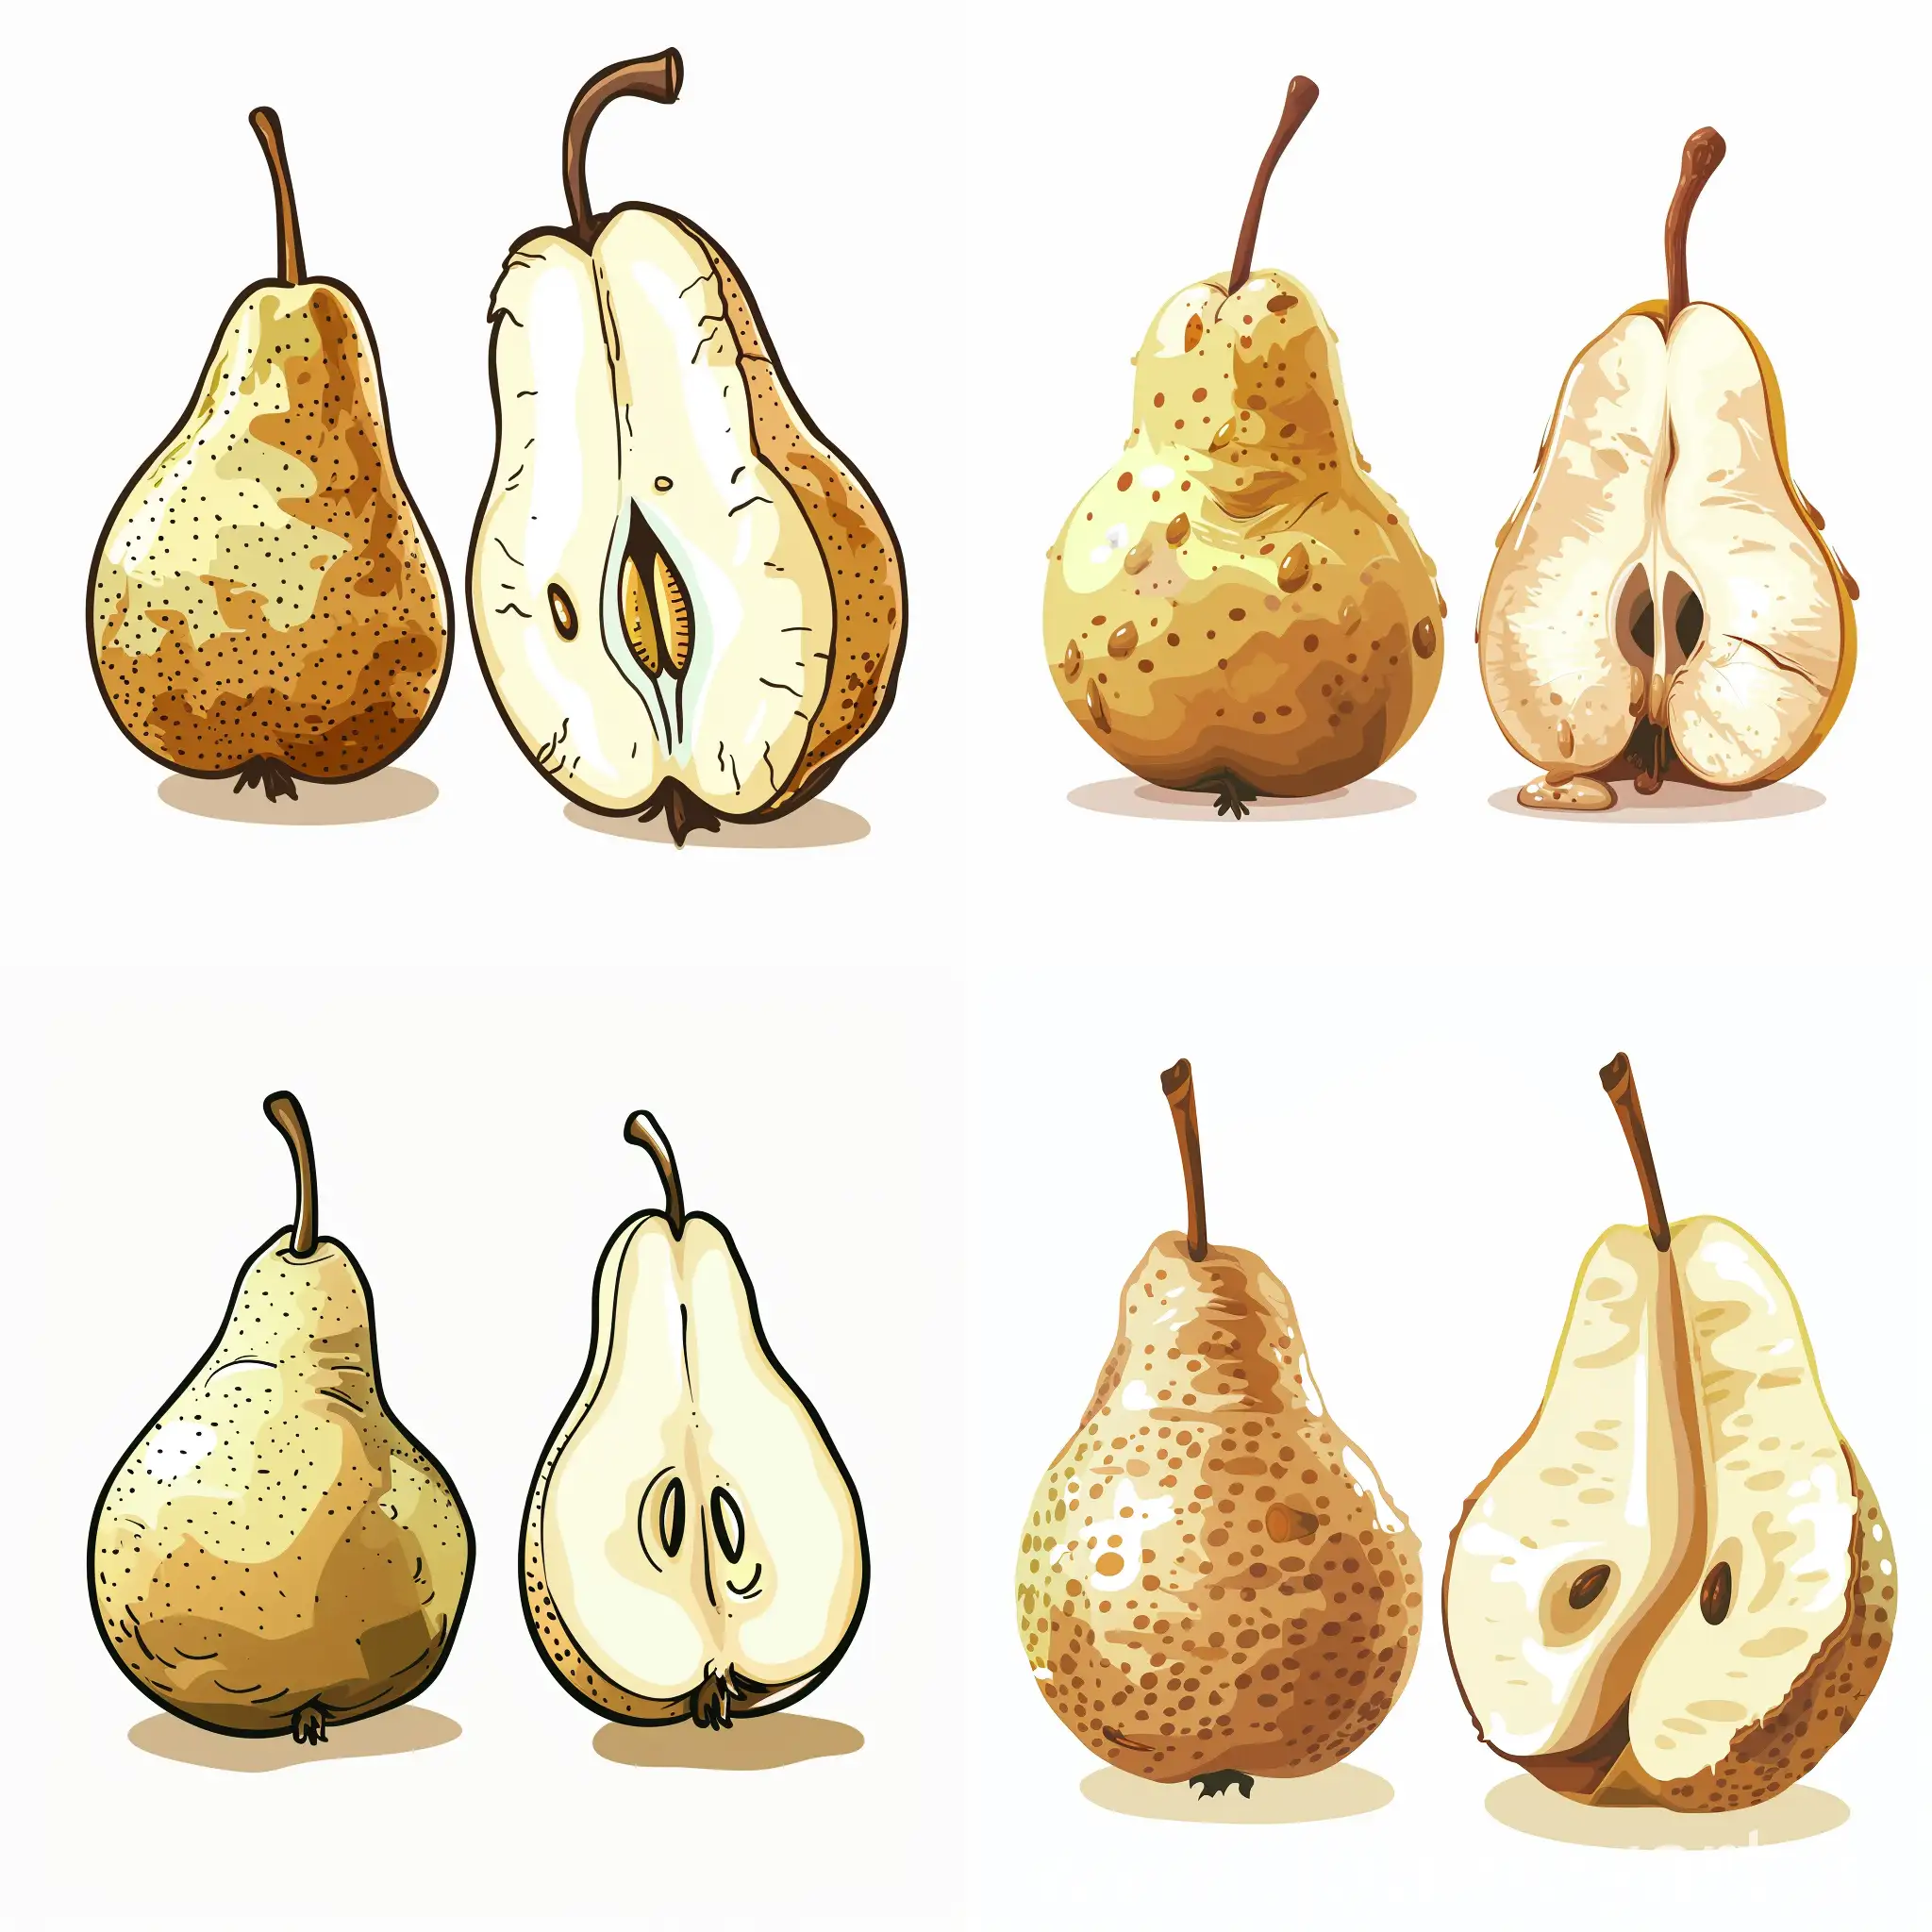 Cartoon-Pears-Whole-vs-Eaten-Vector-Illustration